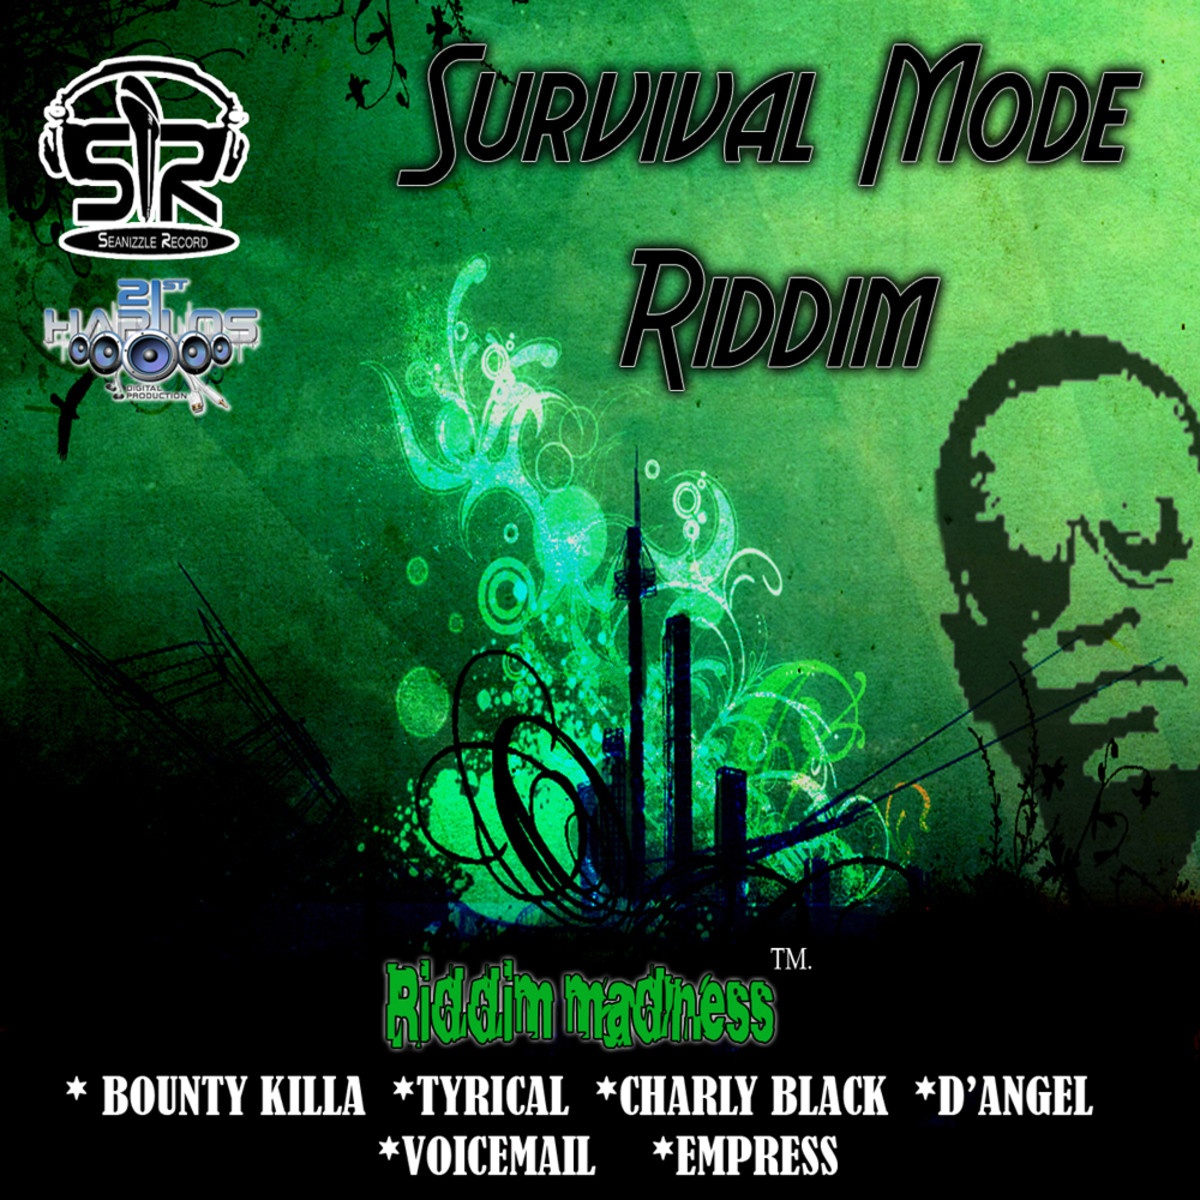 Survival Mode Riddim